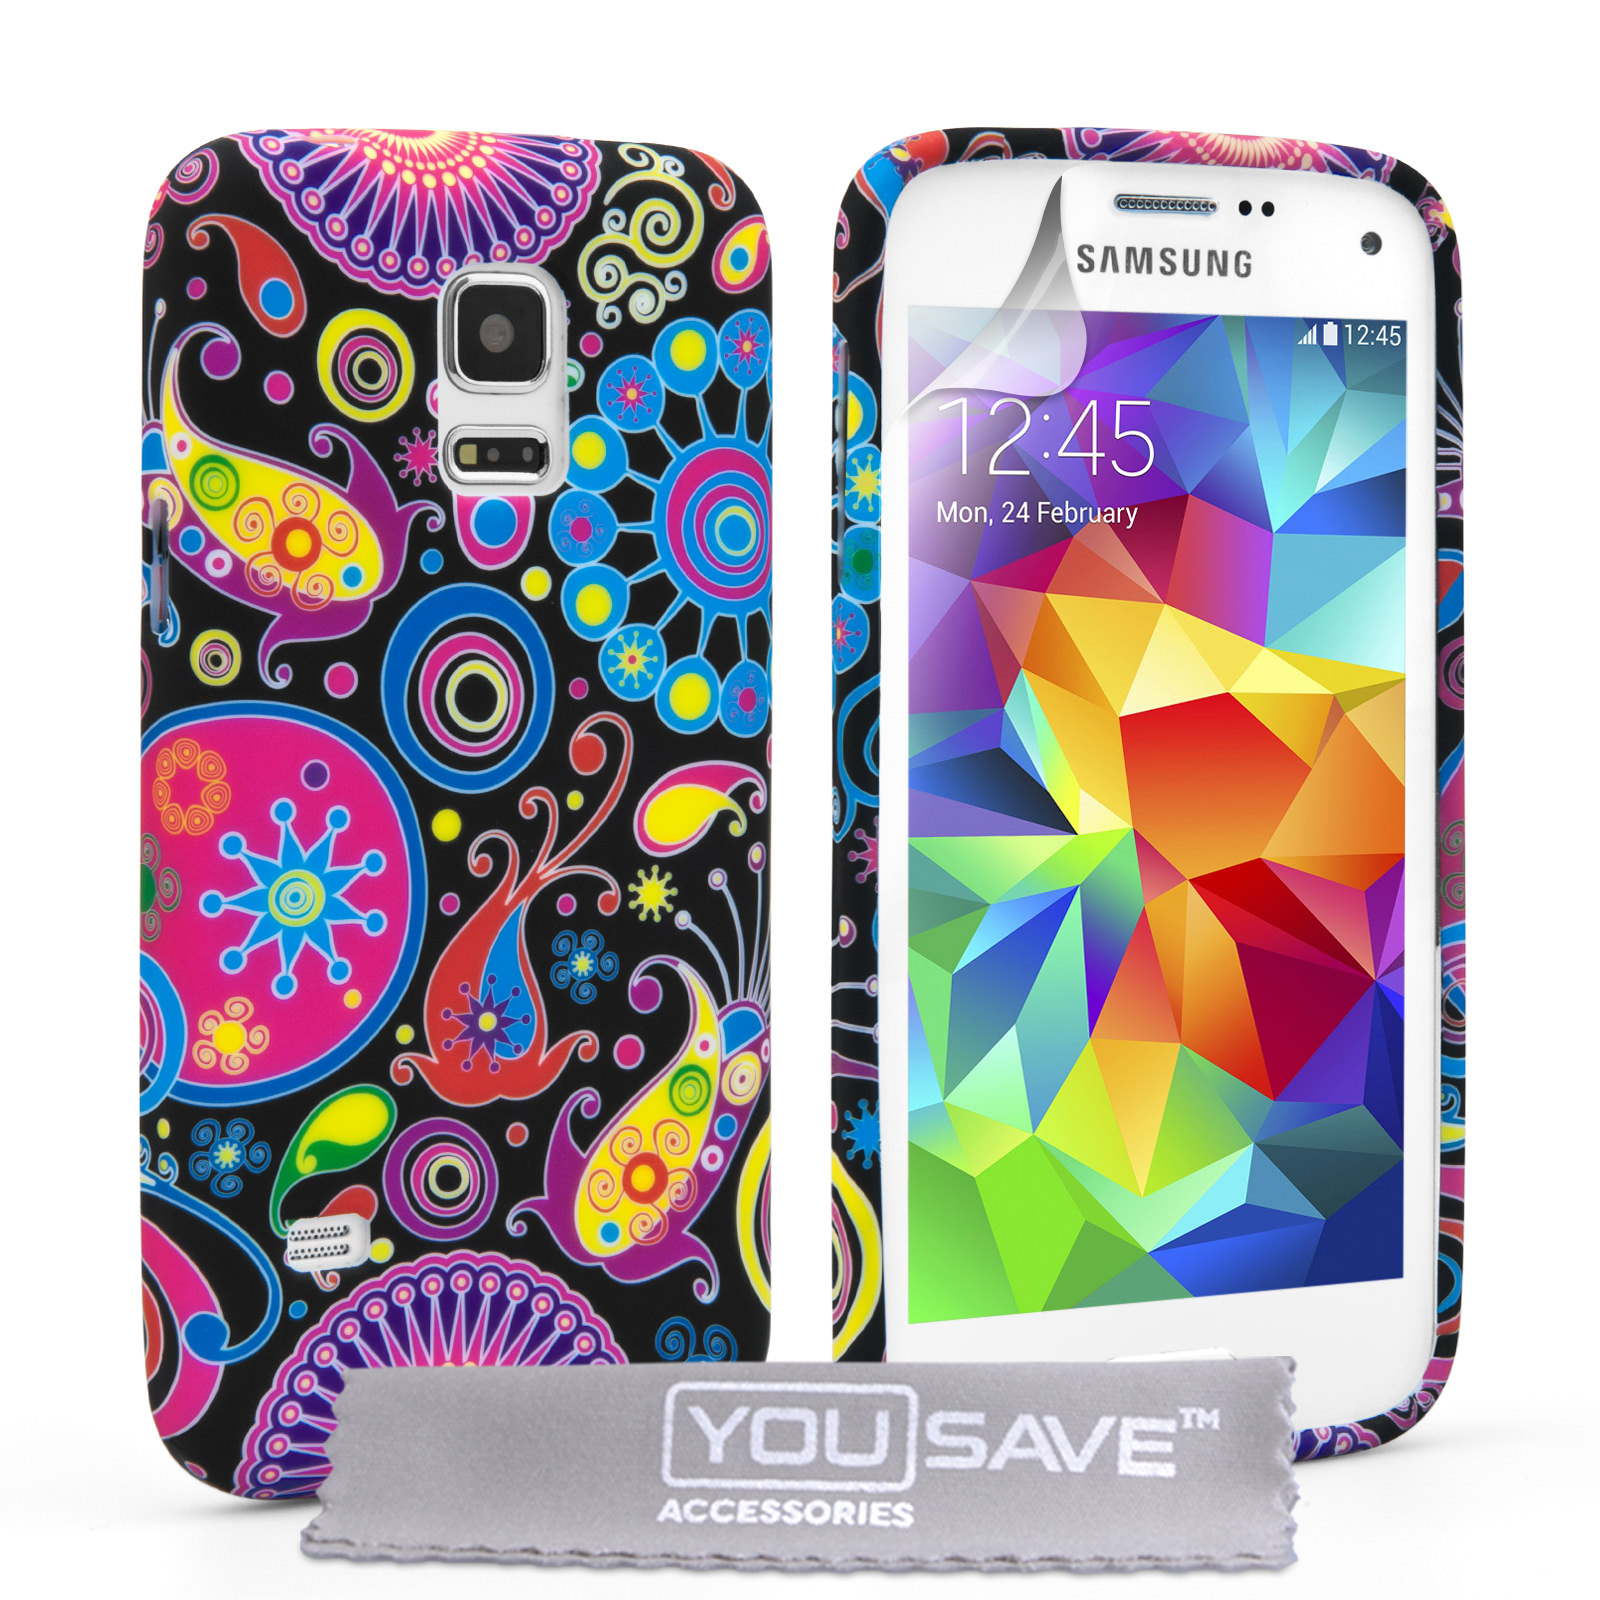 YouSave Accessories Samsung Galaxy S5 Mini Jellyfish Silicone Gel Case